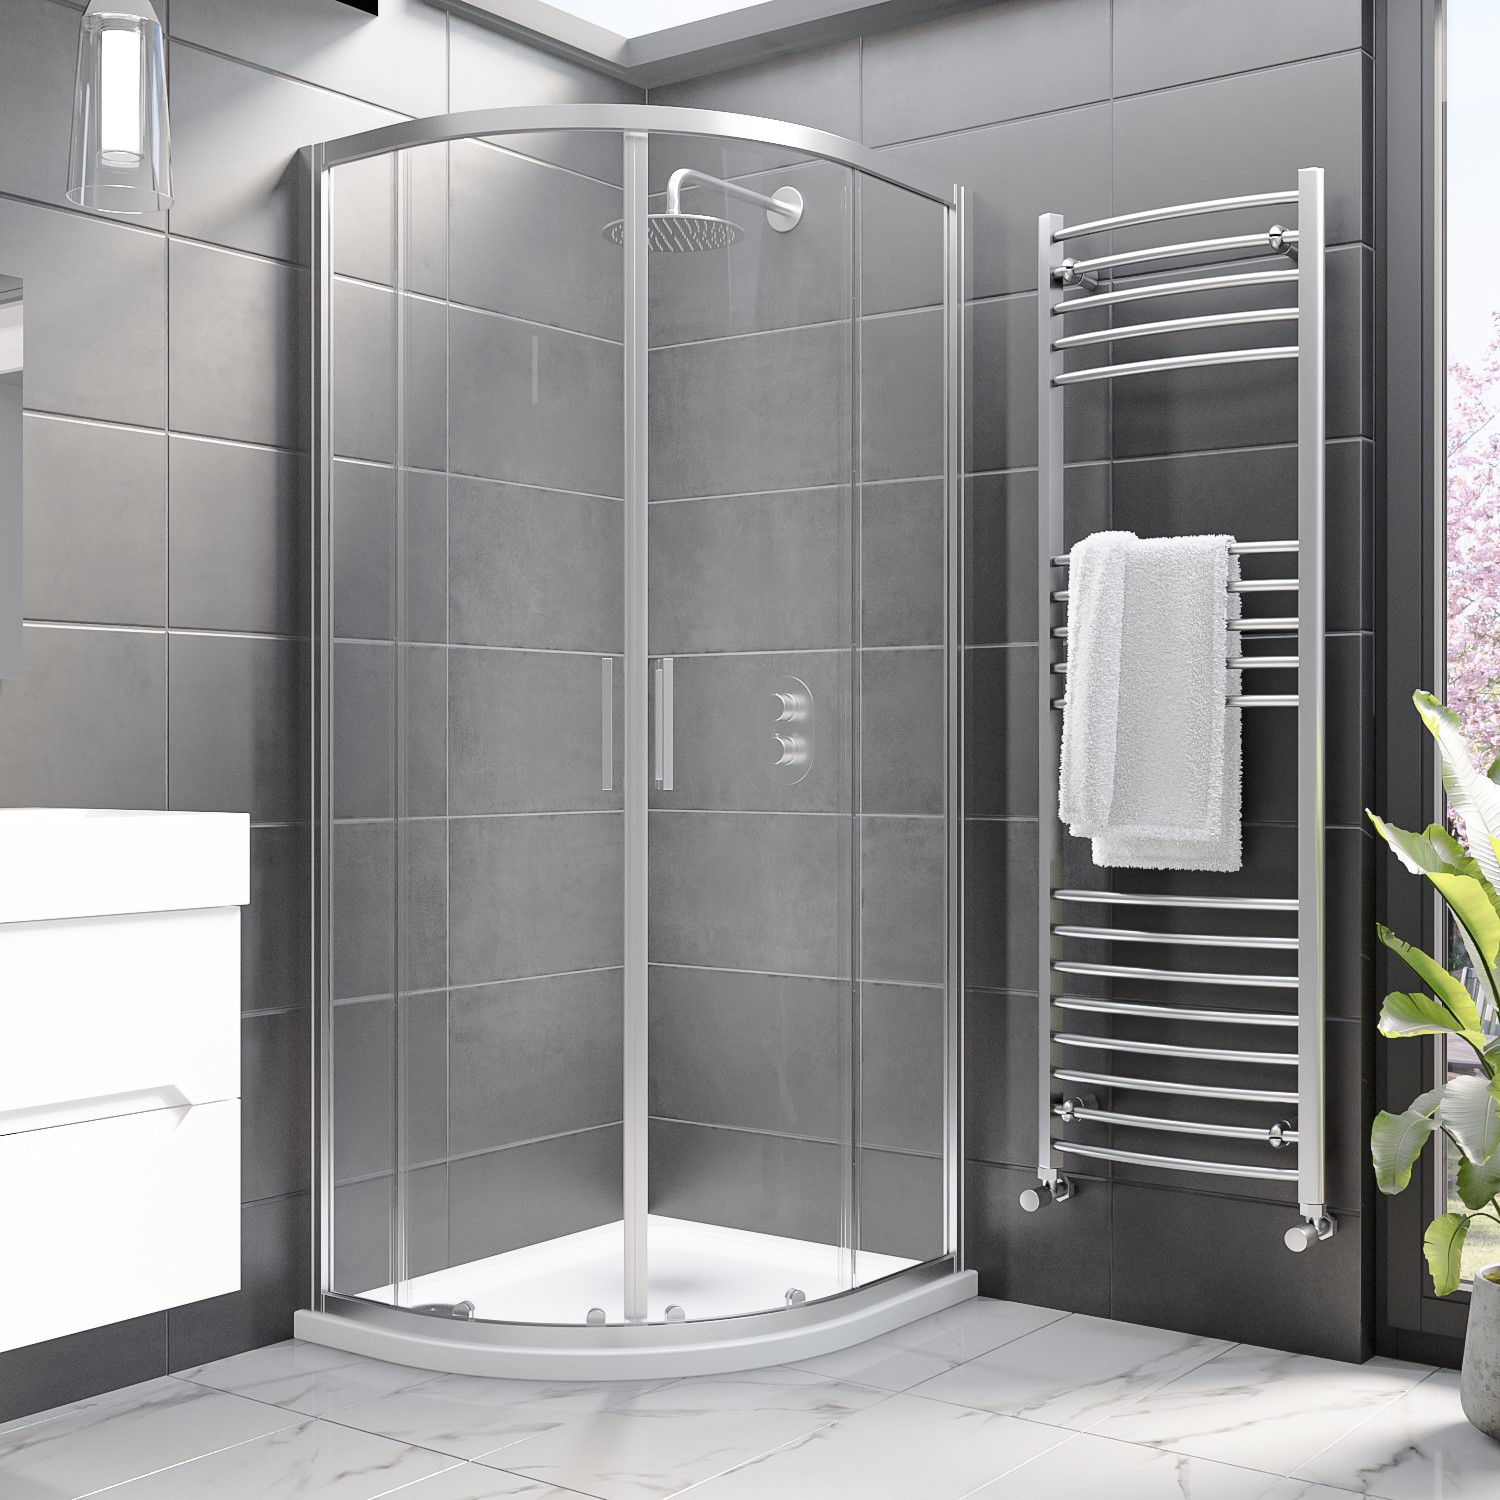 900 x 760mm Offset Quadrant Shower Enclosure - Pavo